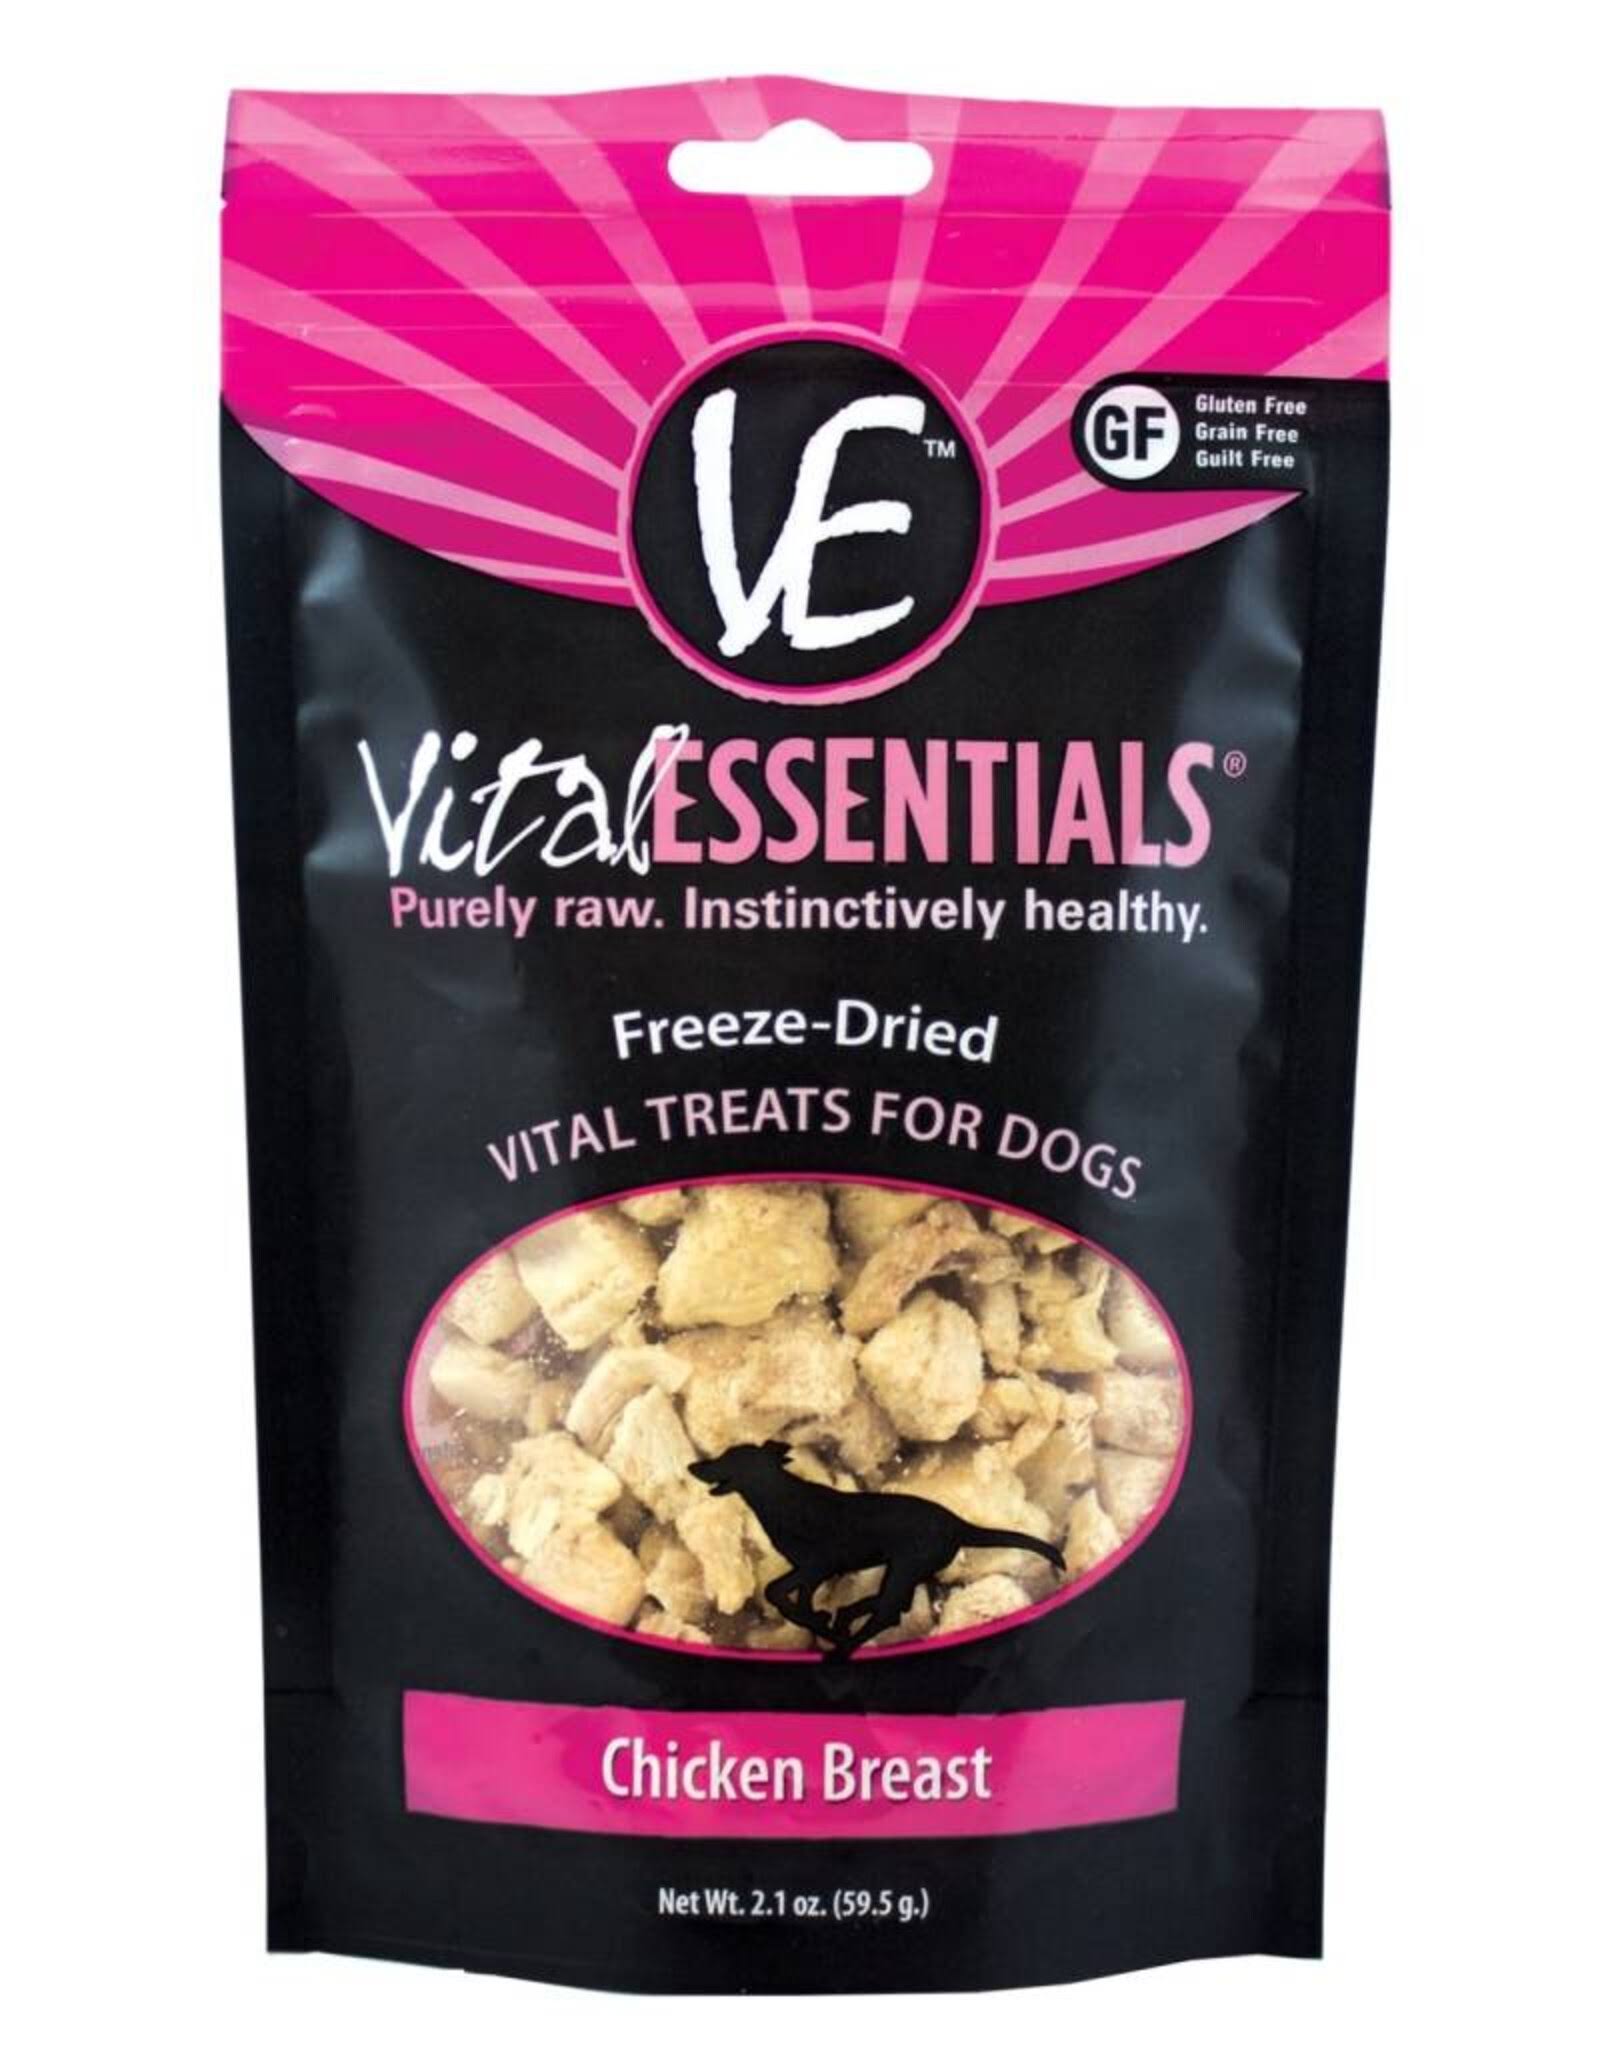 Vital Essentials Freeze-Dried Chicken Breast Dog Treats - 2.1 oz. Pouch